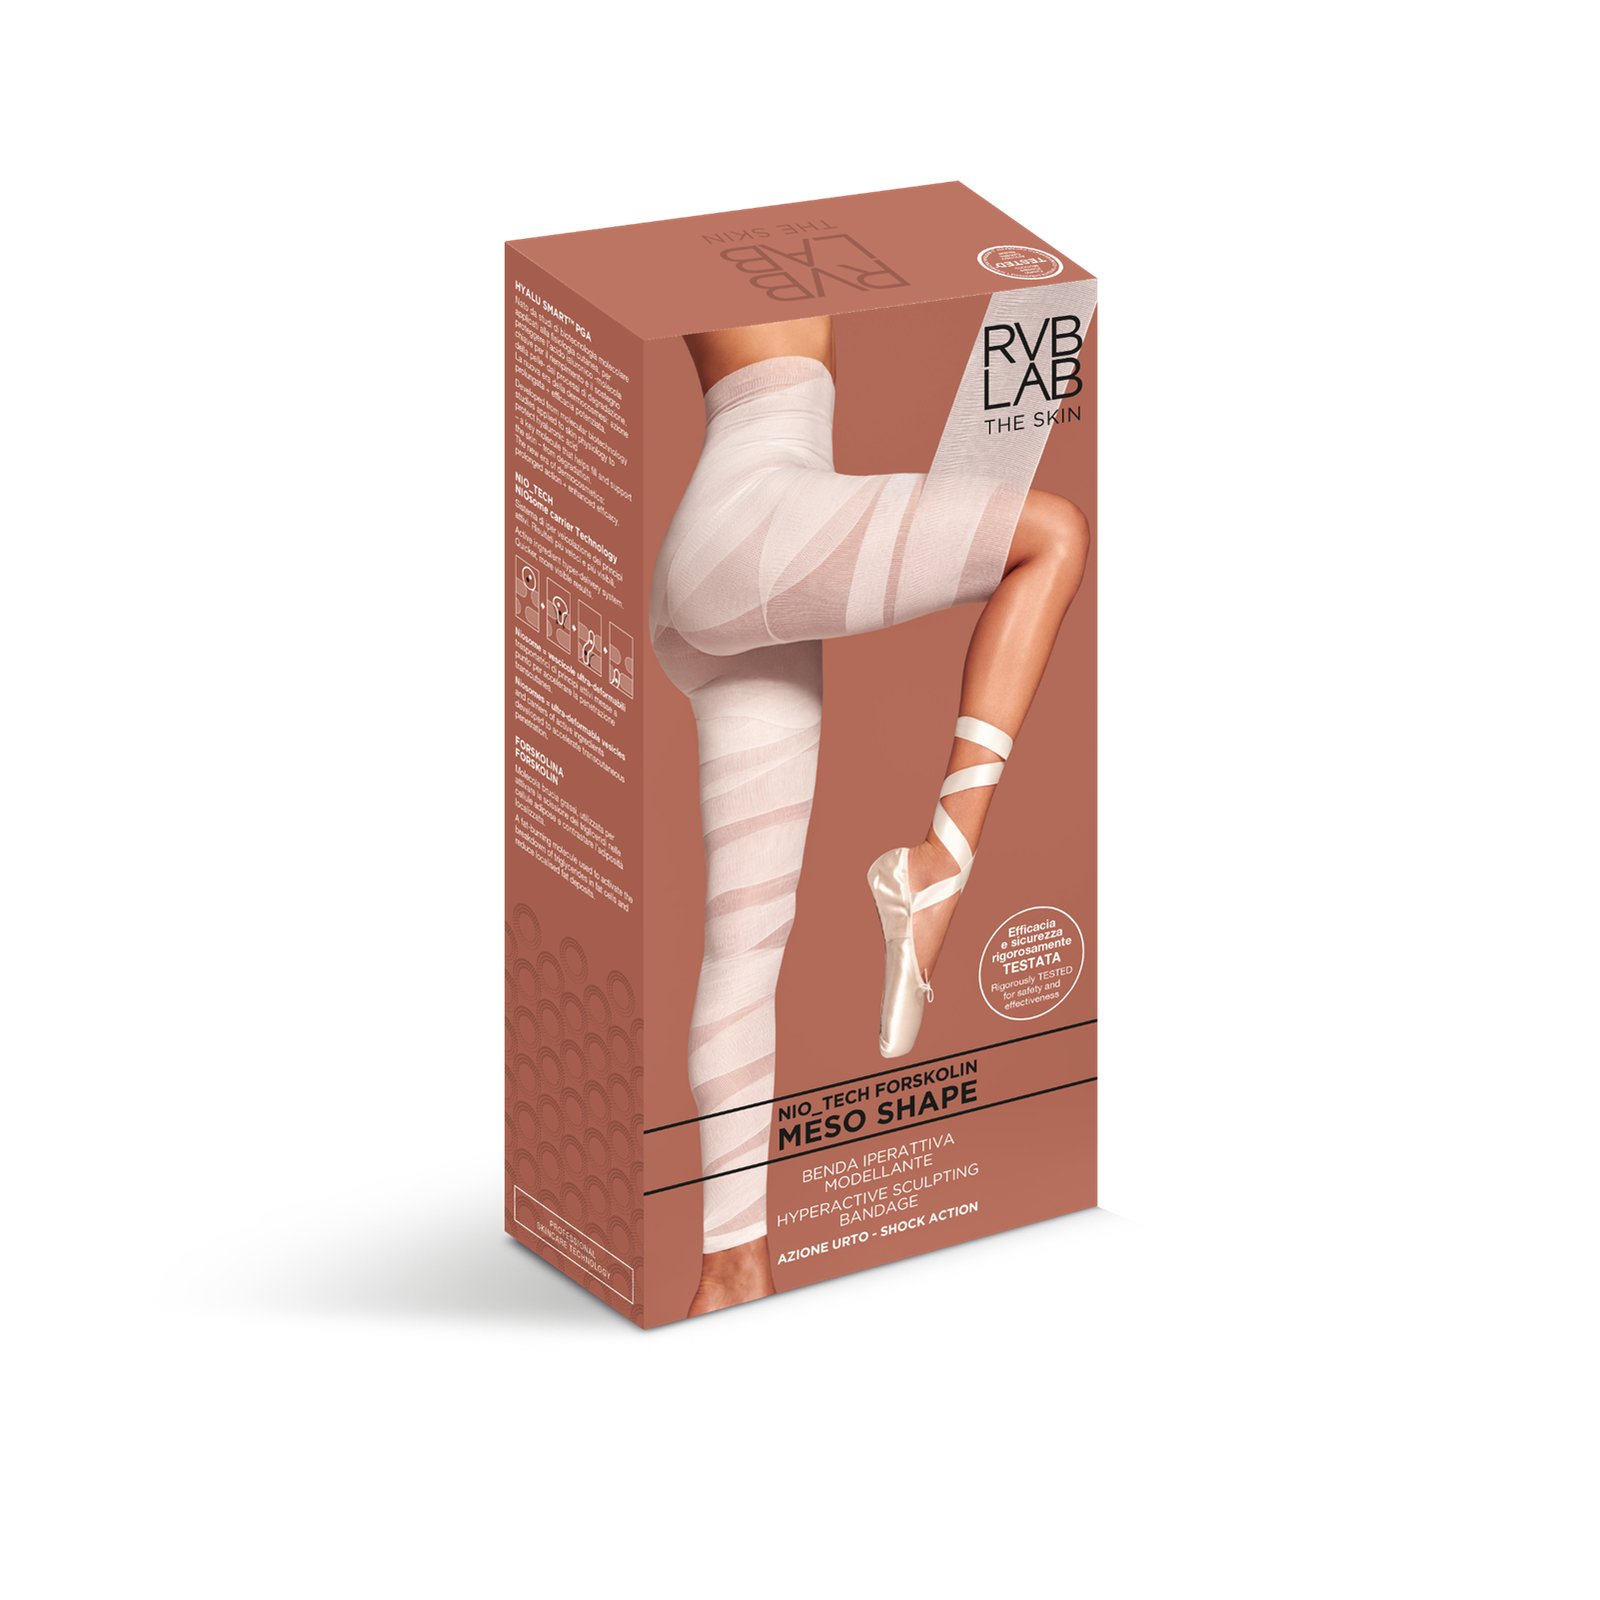 RVB LAB Meso Shape Hyperactive Sculpting Bandage Kit